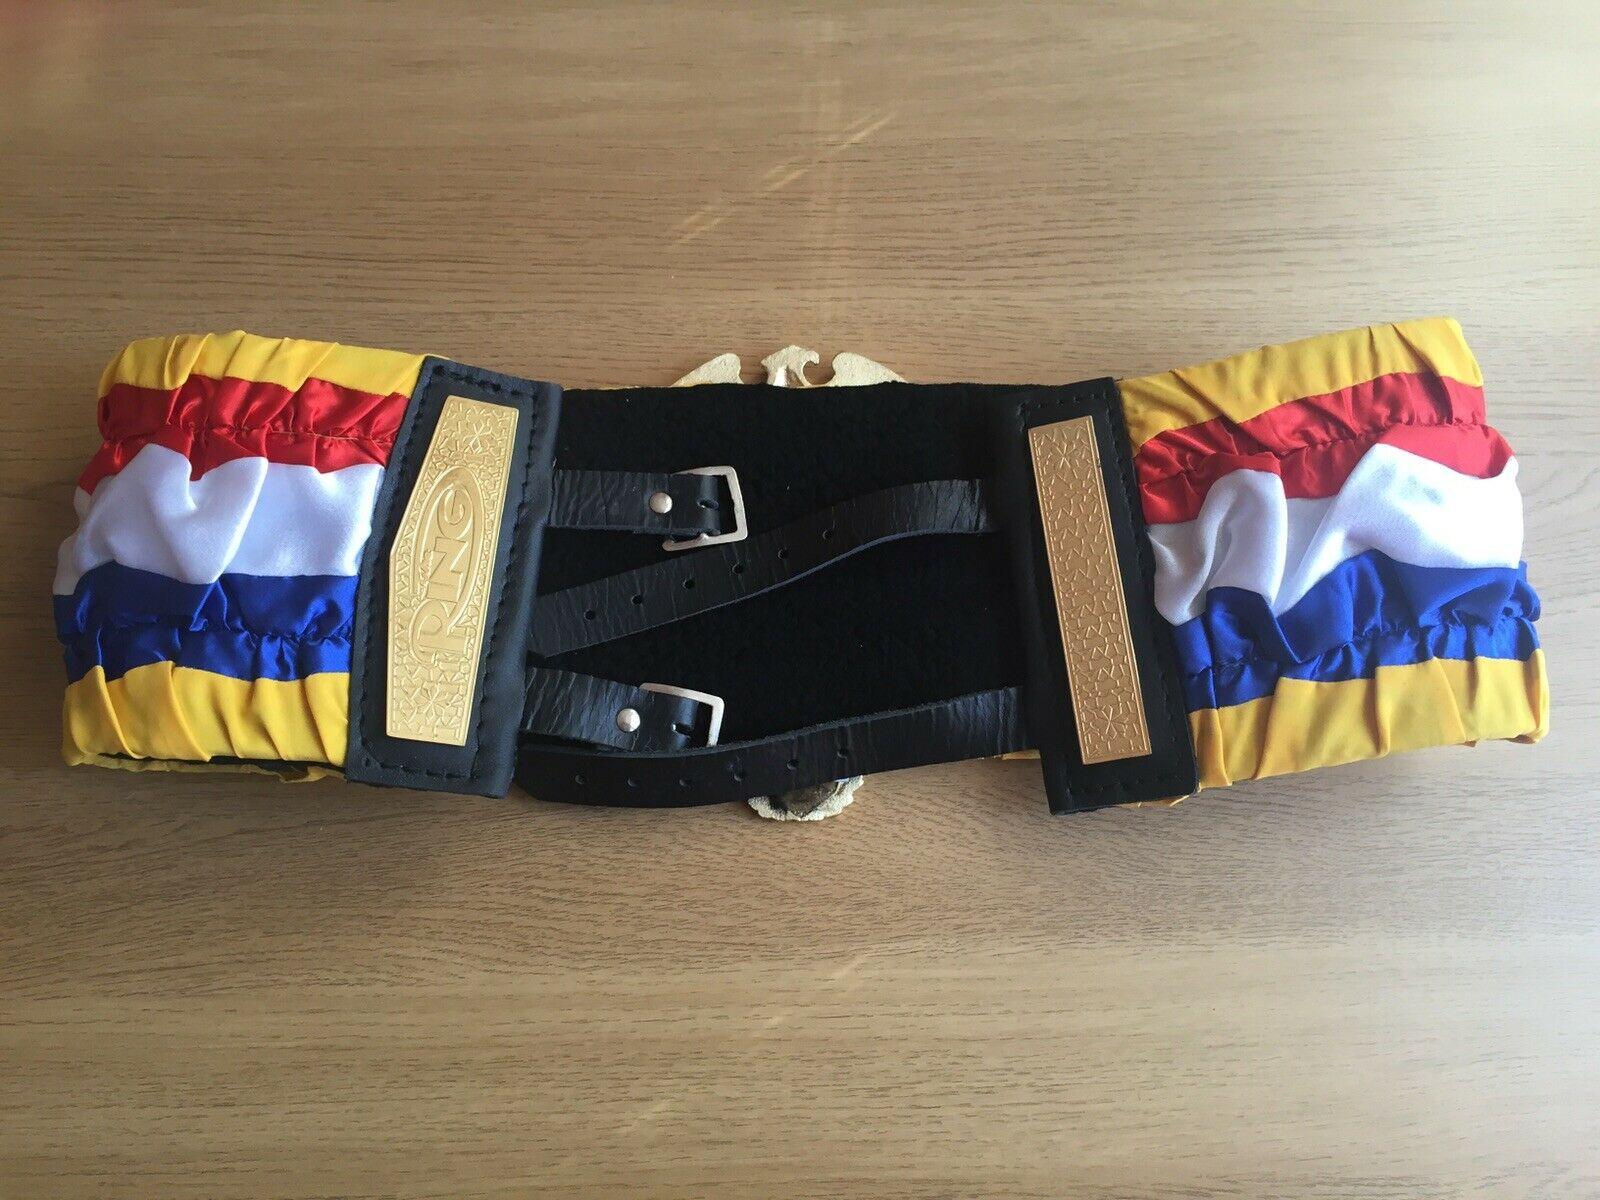 RING MAGAZINE UNDISPUTED BOXING Championship Belt - Zees Belts